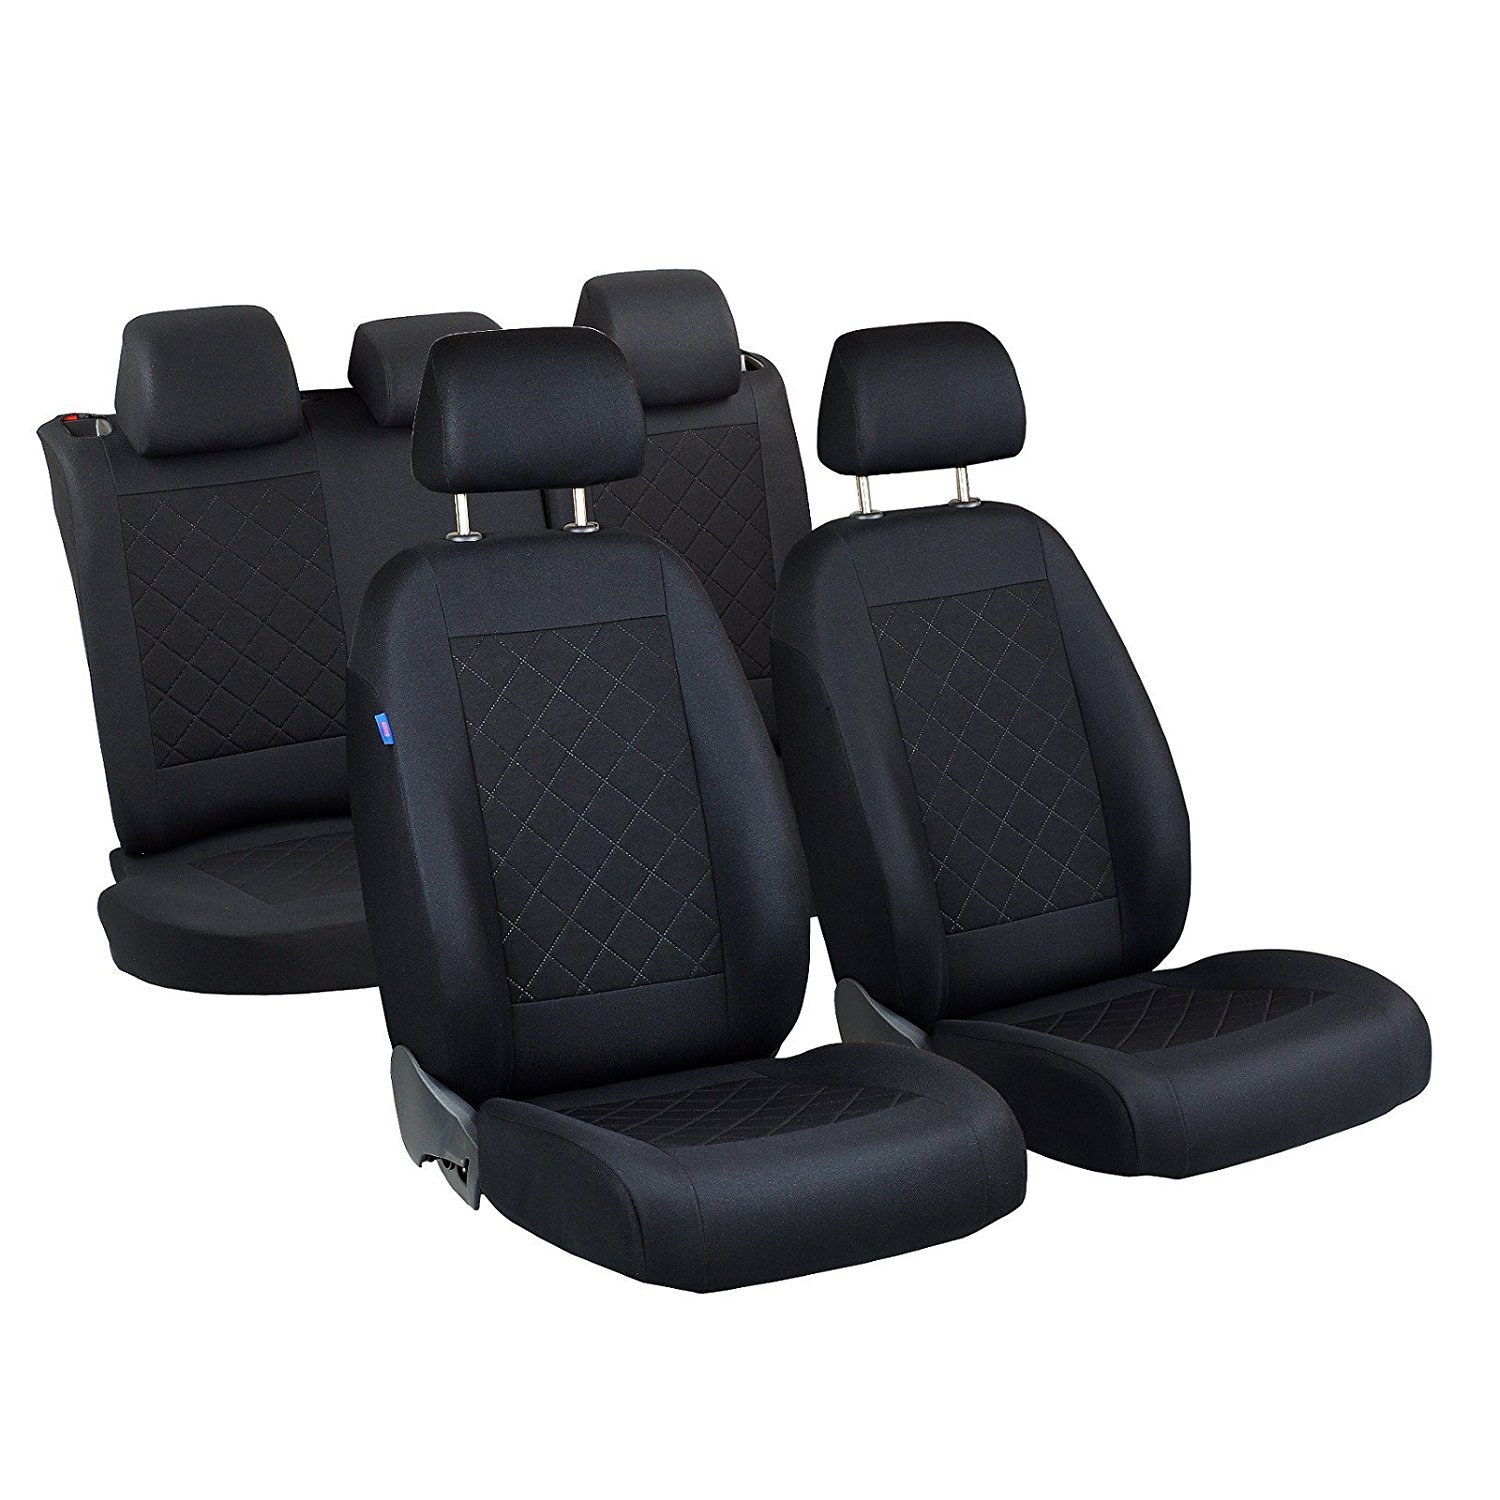 Superb Sitzbezüge - 1 Set - Farbe Premium Schwarz gepresstes Karomuster